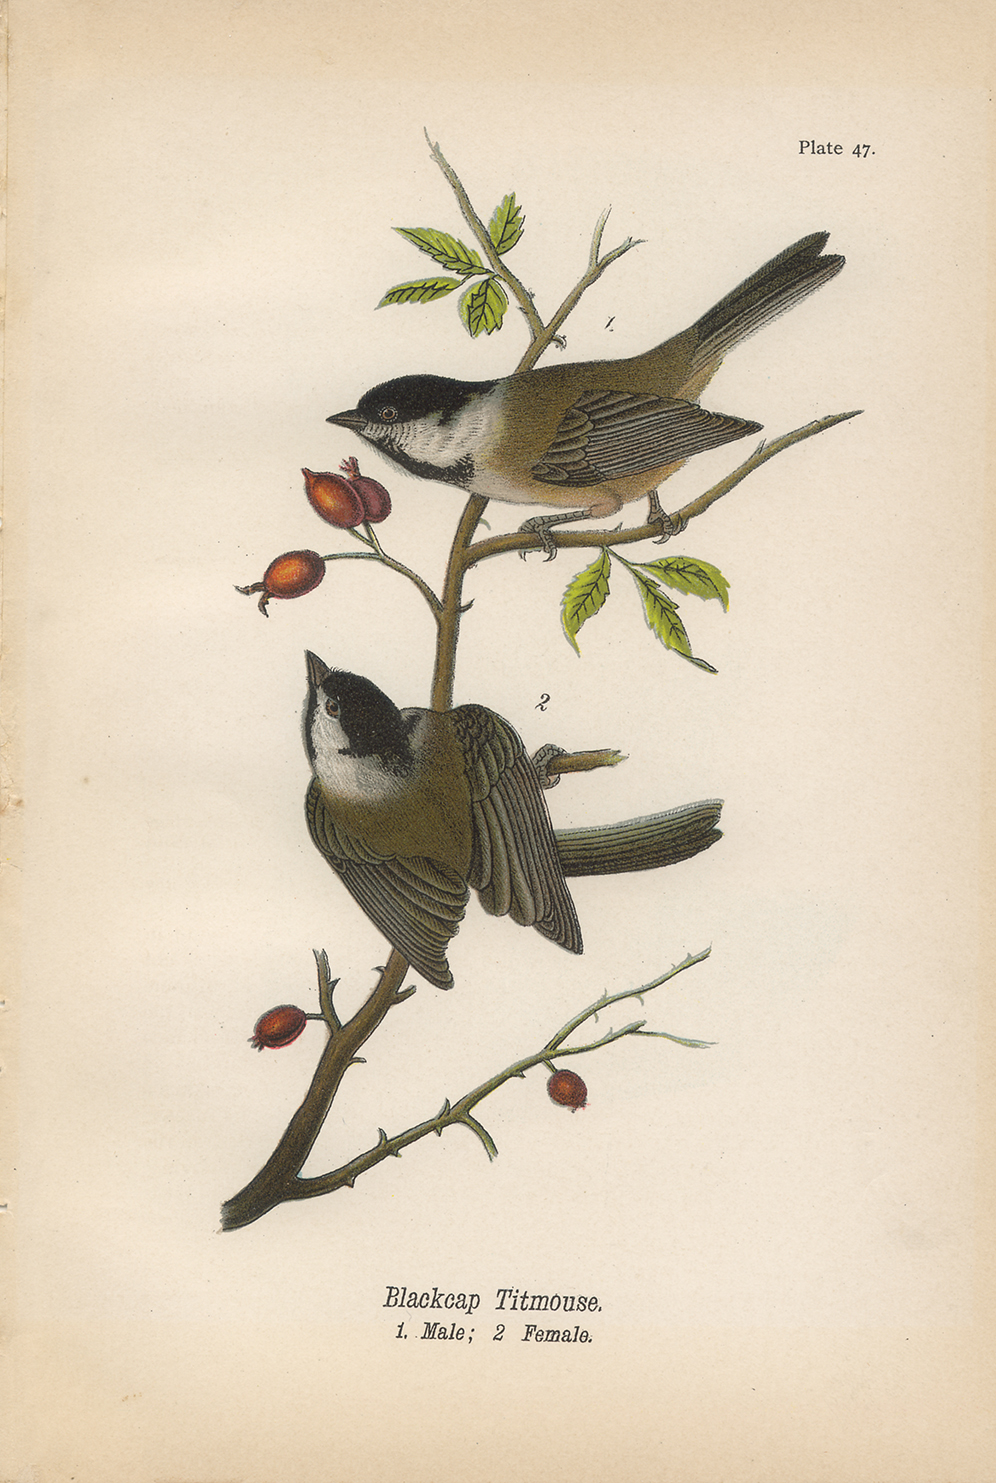 Marine Life/Birds Animals Blackcap Titmouse Vintage Color Illustration Reproduction Print Behind Glass